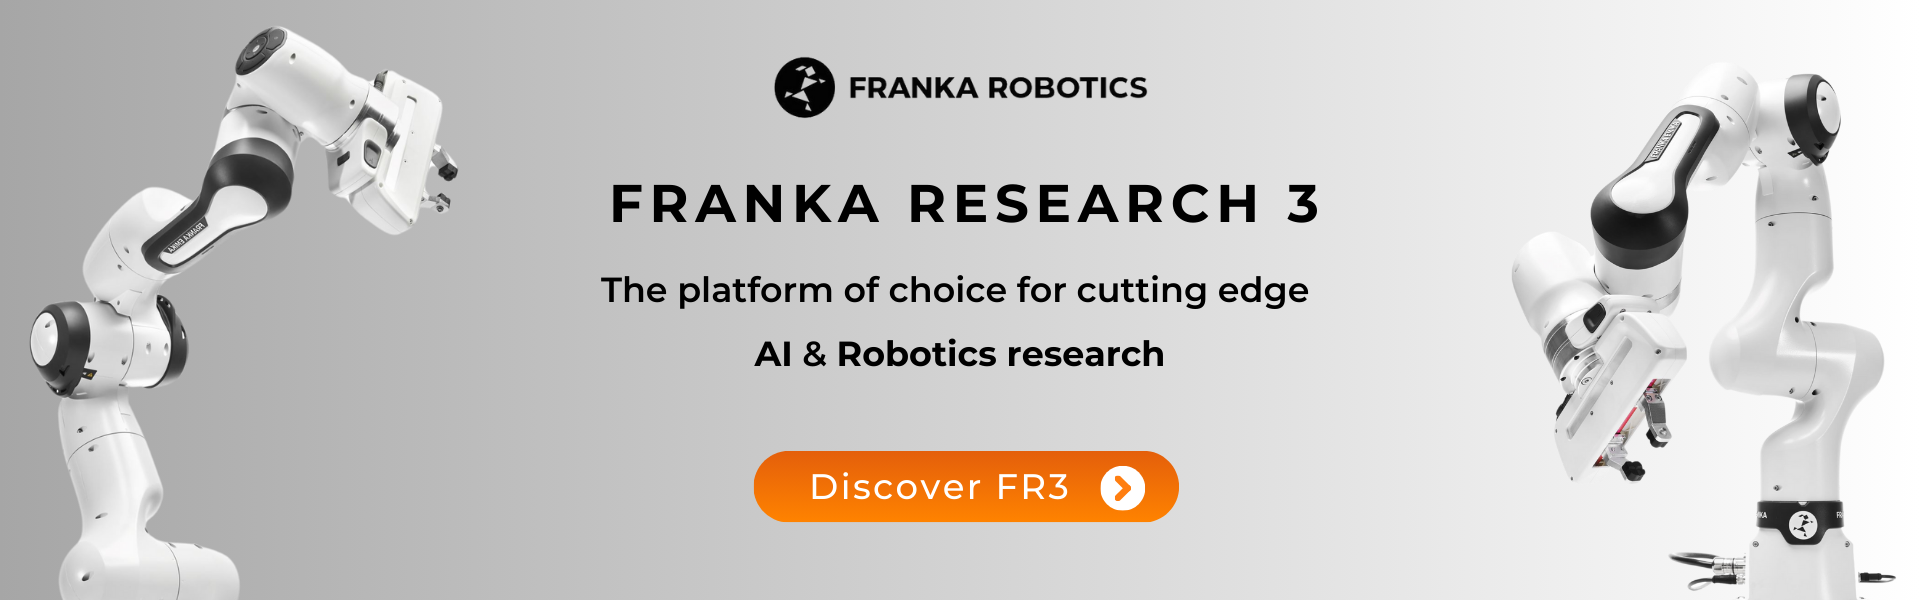 Banner Franka Research 3